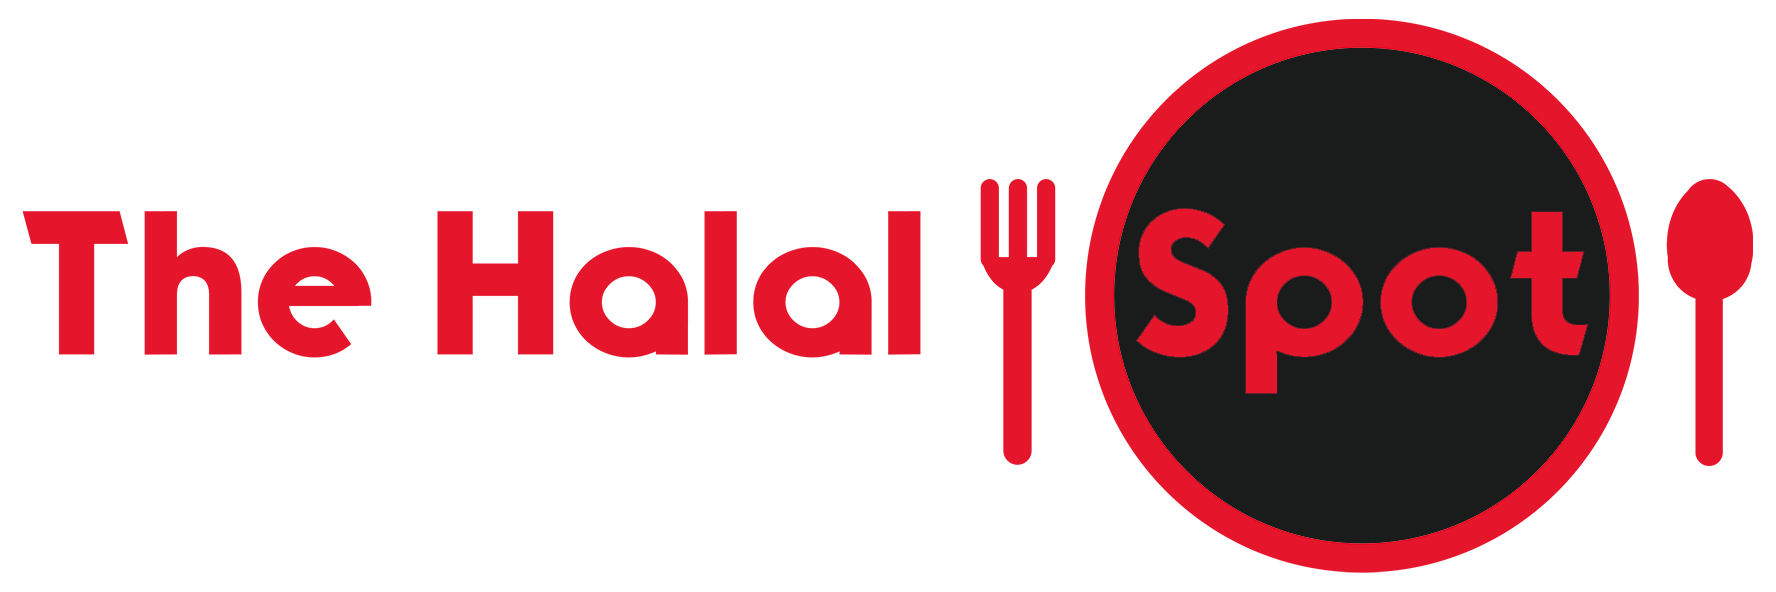 The Halal Spot